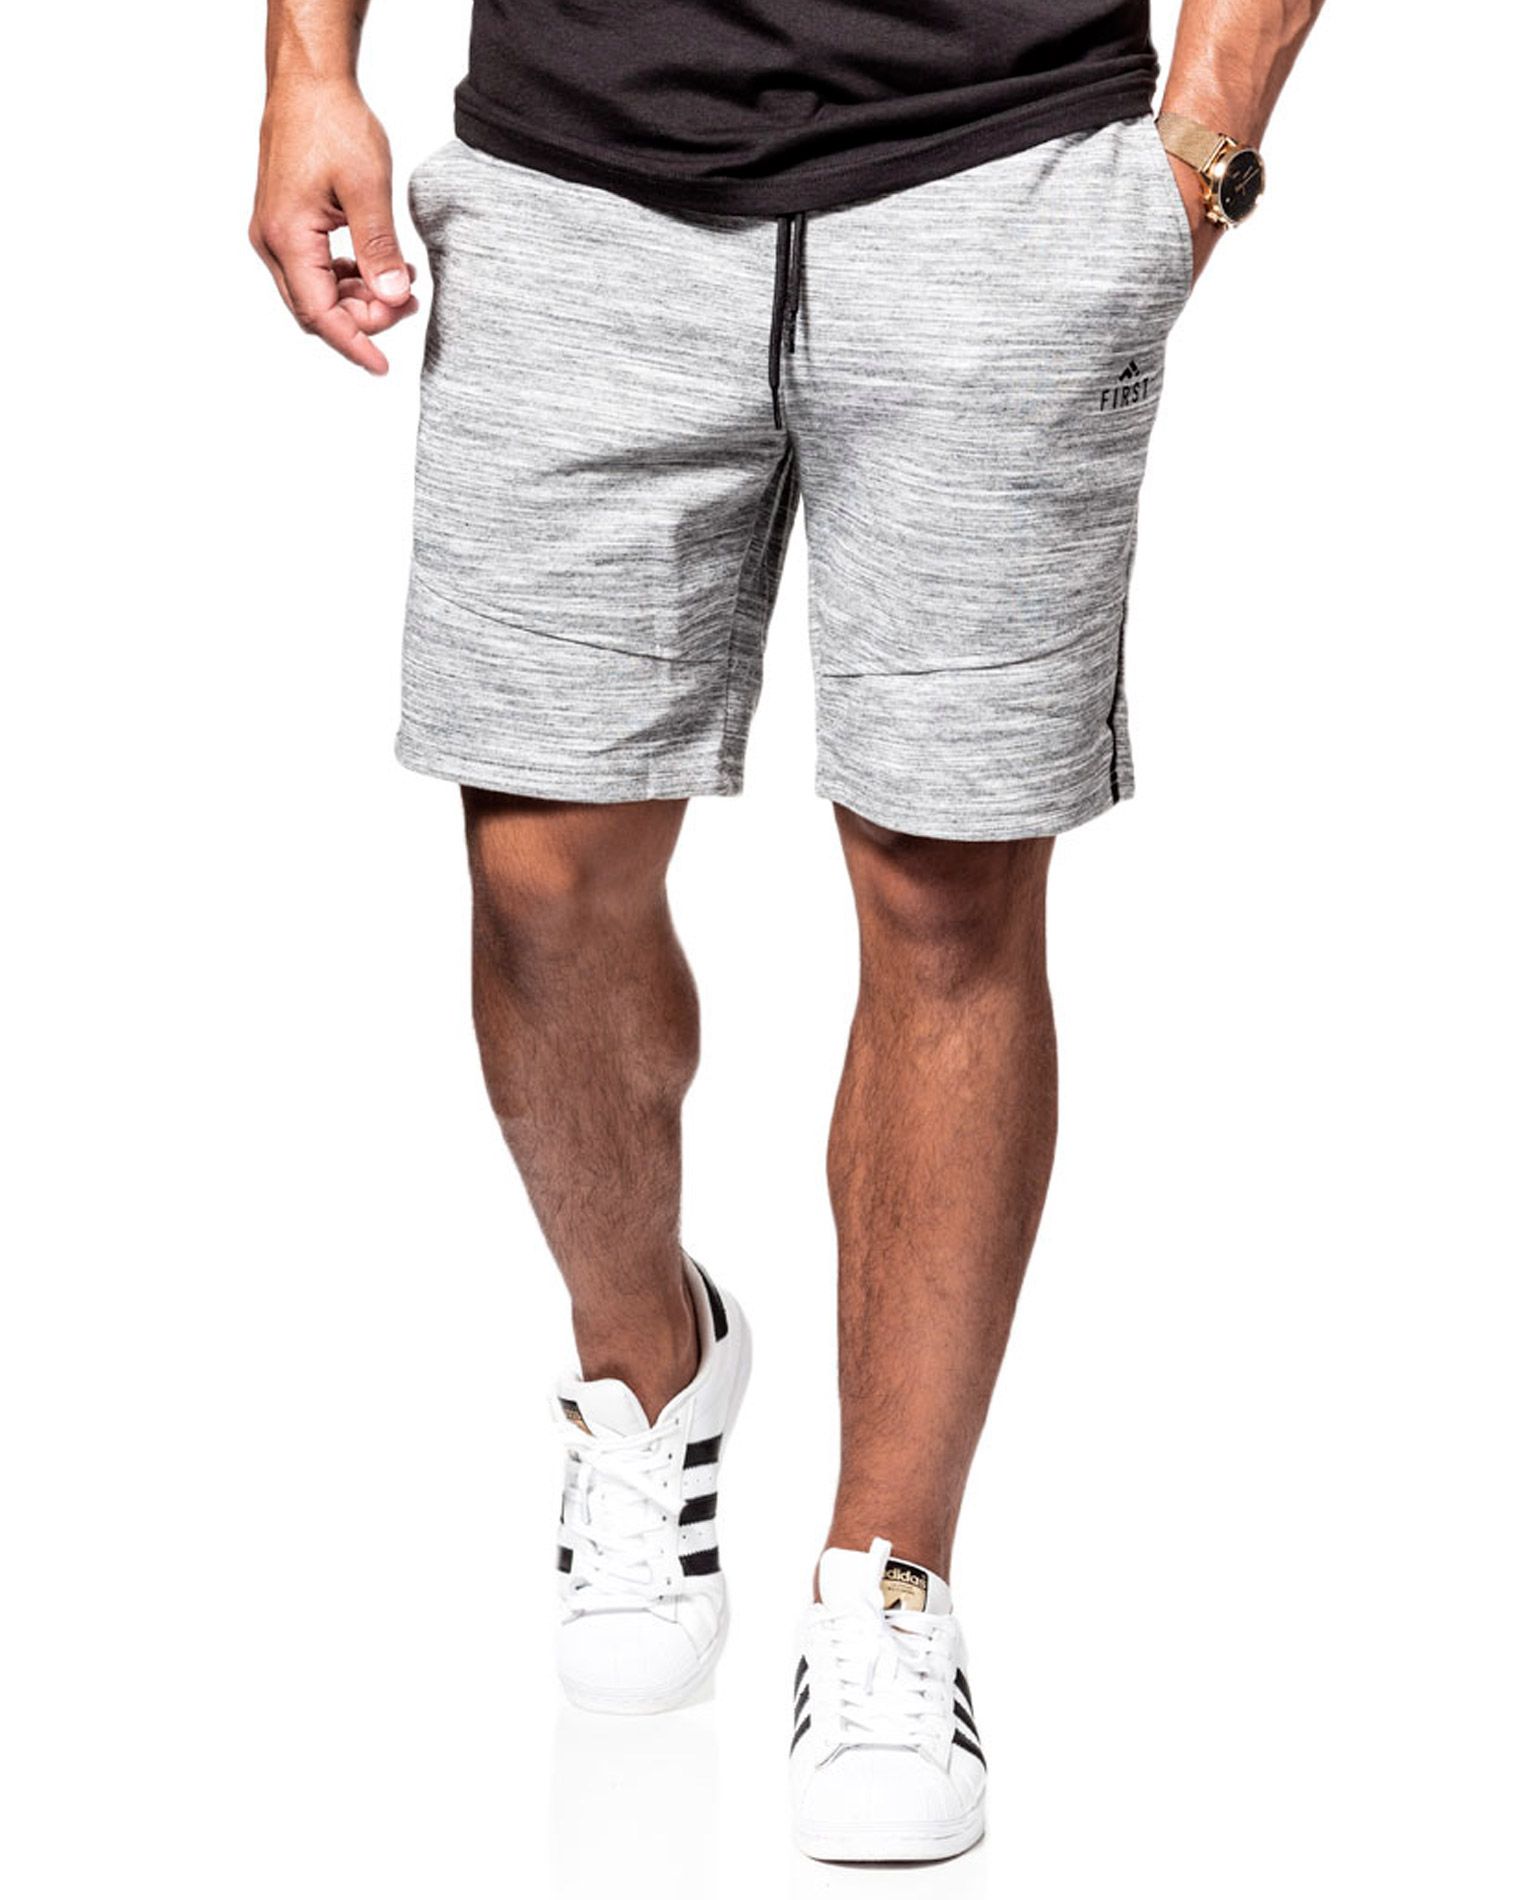 Deon Shorts Gray FIRST - 9206 - Shorts - Jerone